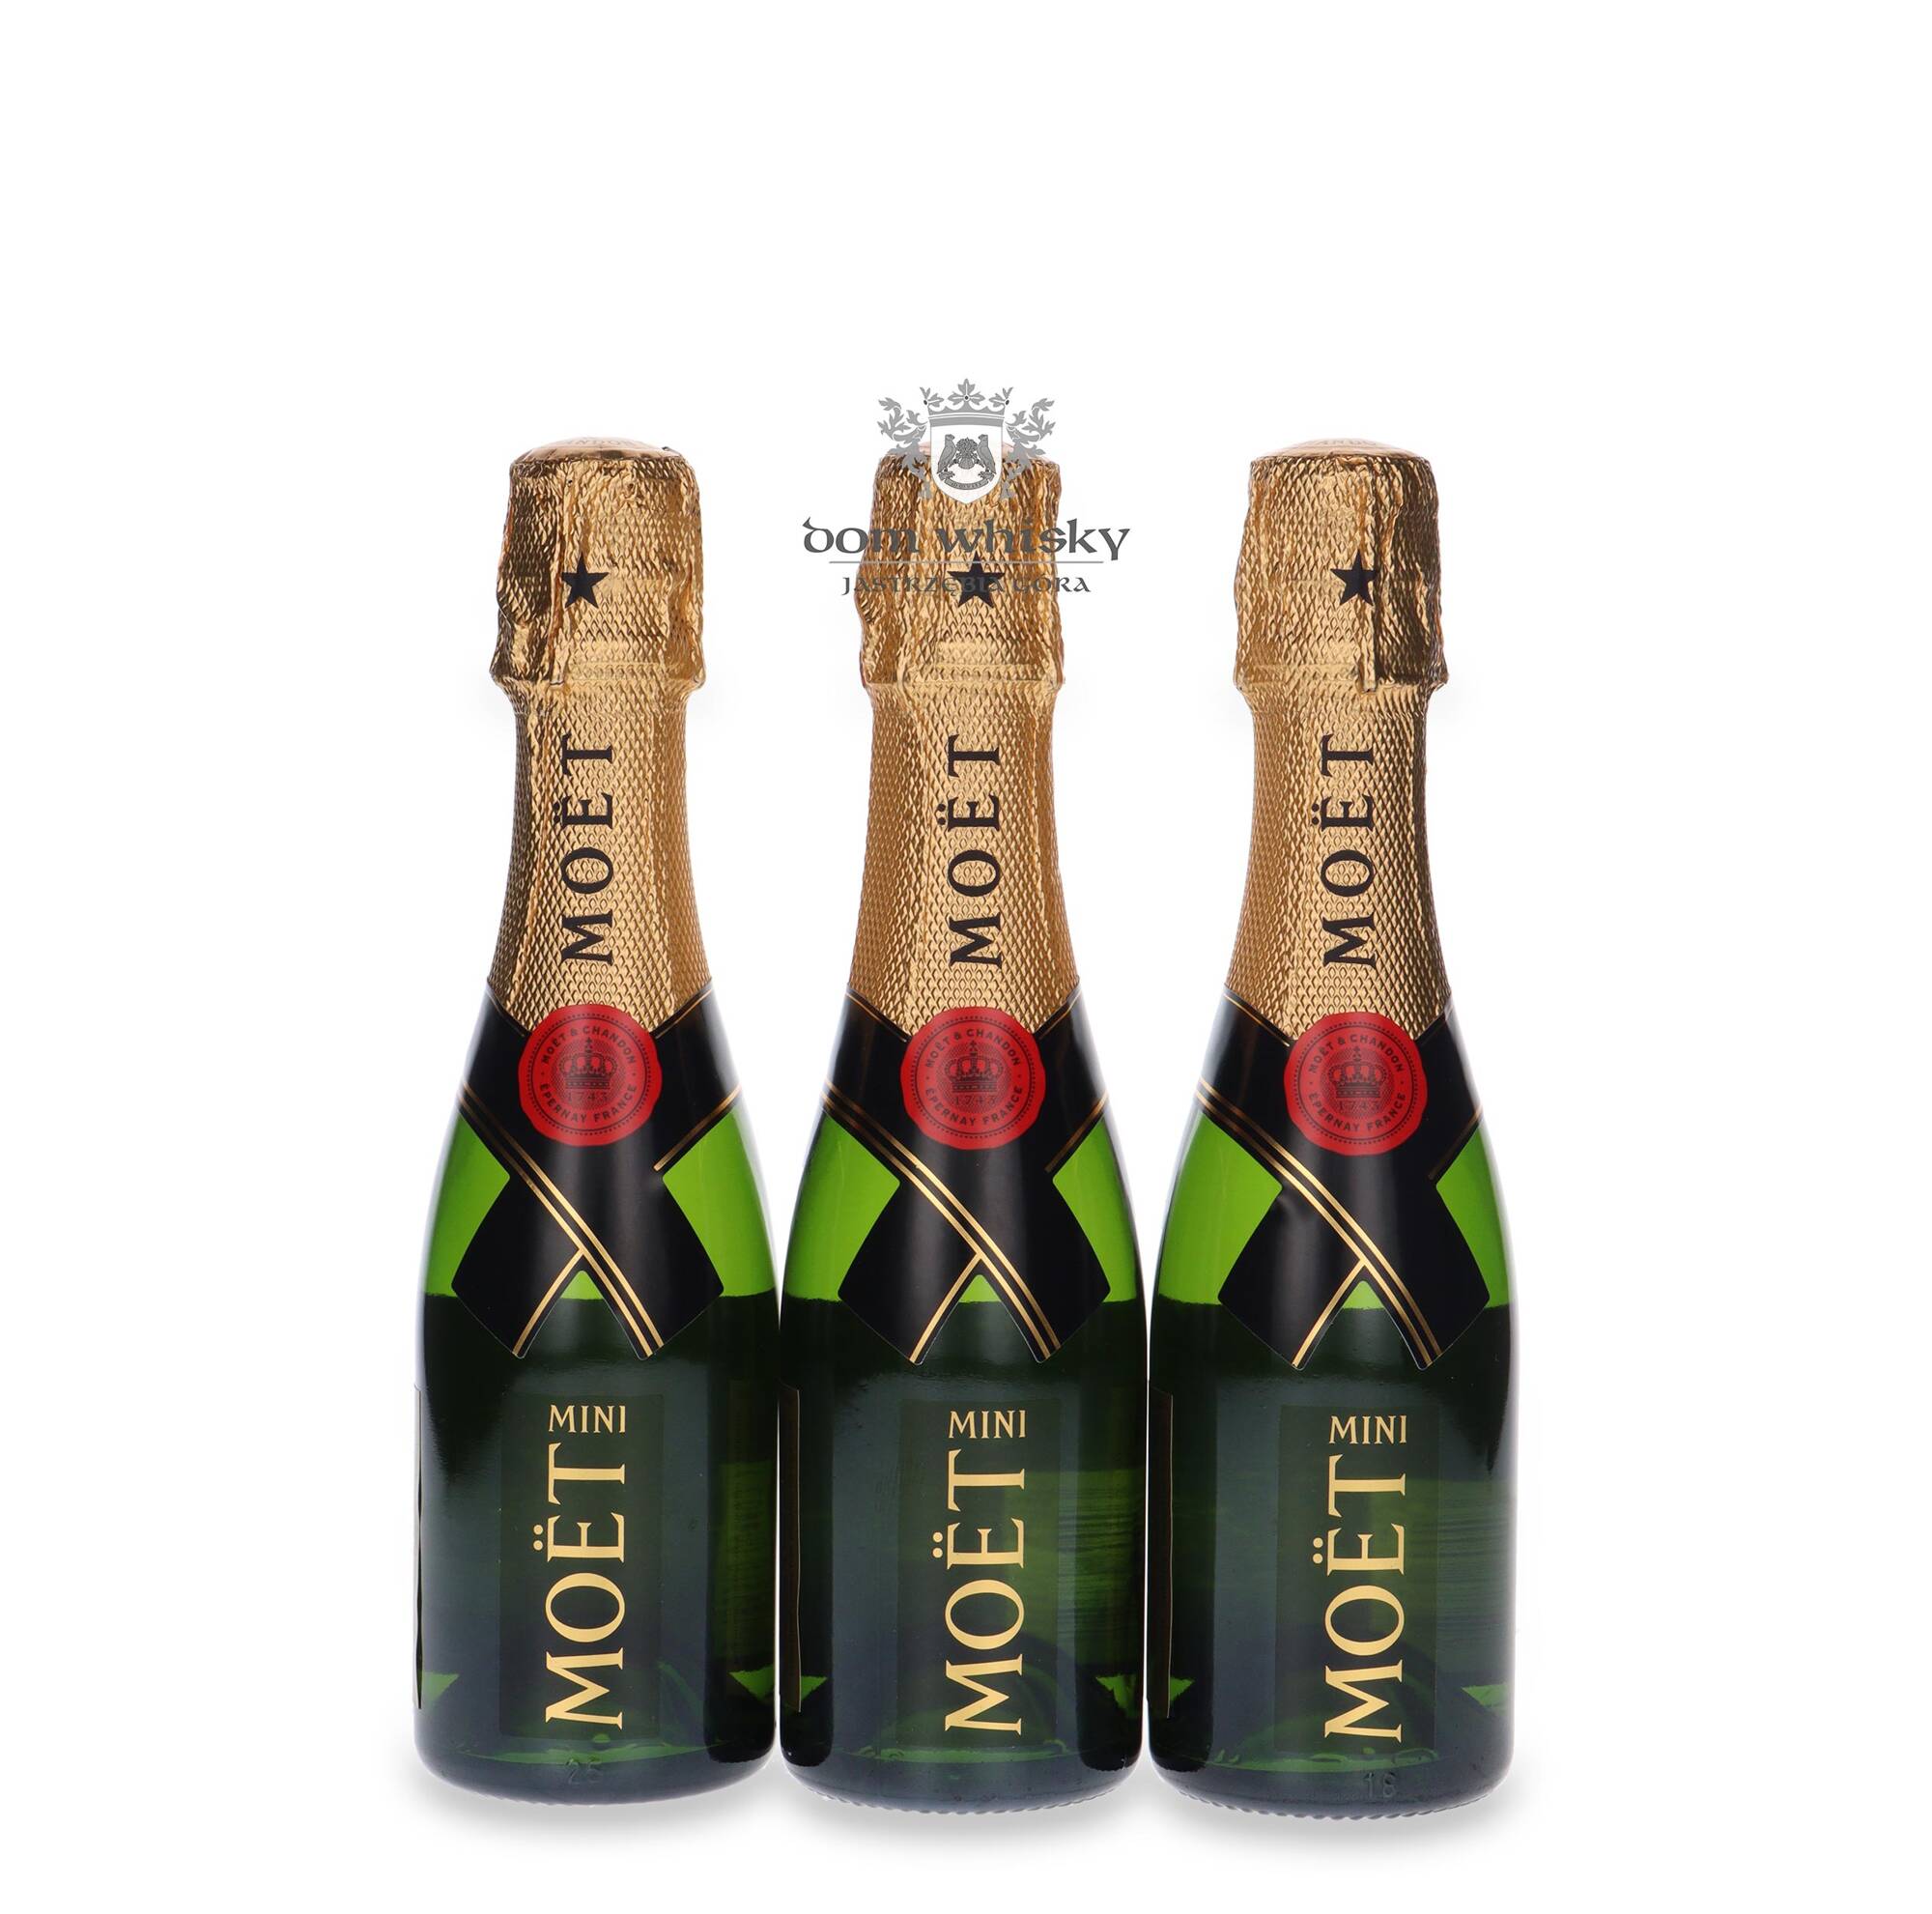 Moet & Chandon Brut Imperial NV Champagne - Mini Moet : The Whisky